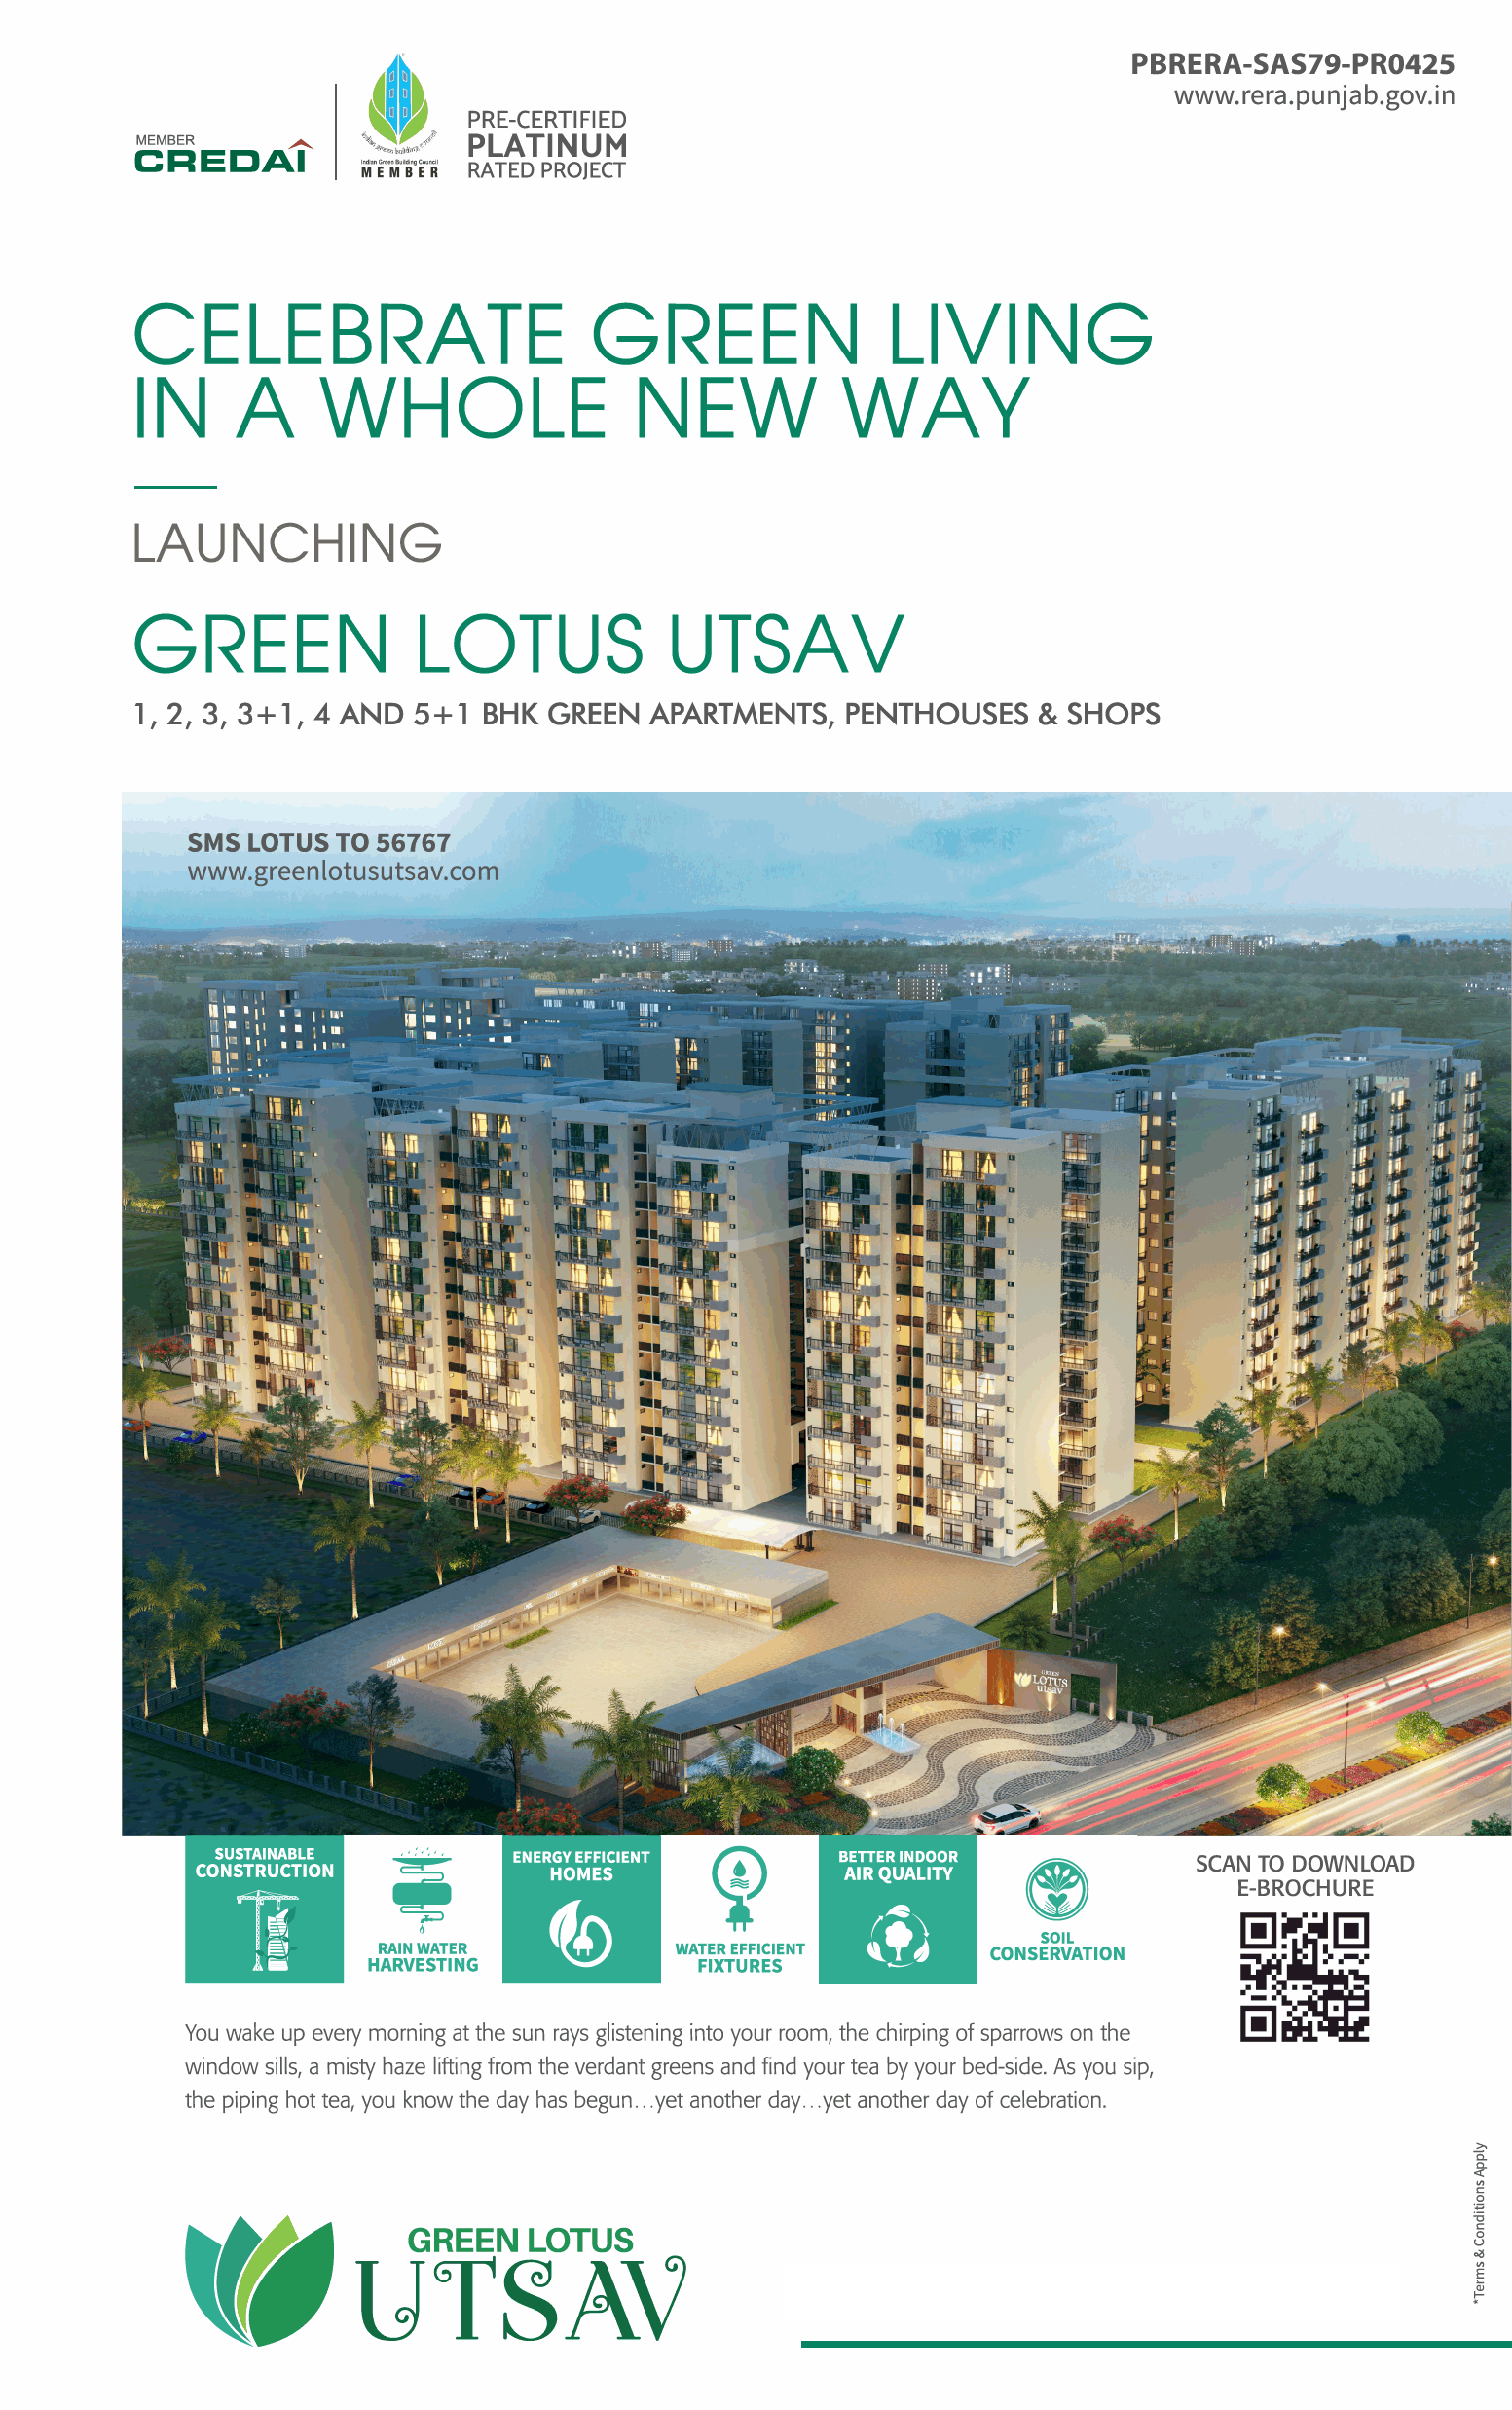 Launching Green Lotus Utsav 1, 2, 3, 3+1, 4 and 5+1 BHK green apartments, penthouses & shops in Chandigarh